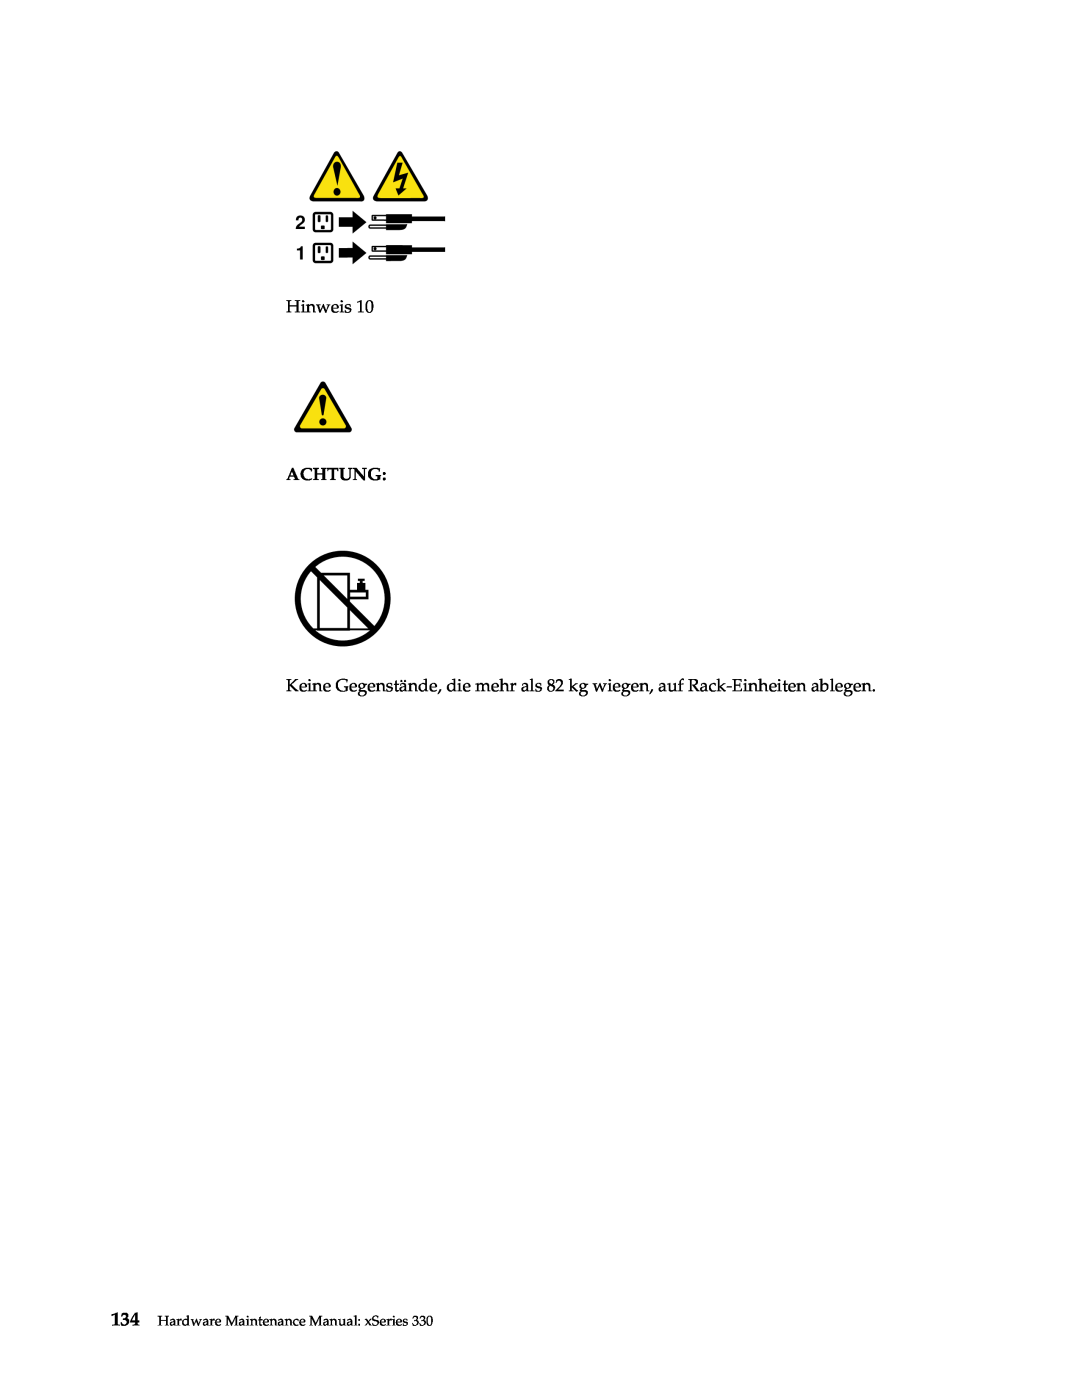 IBM xSeries 330 manual Hinweis, Achtung, Hardware Maintenance Manual: xSeries 